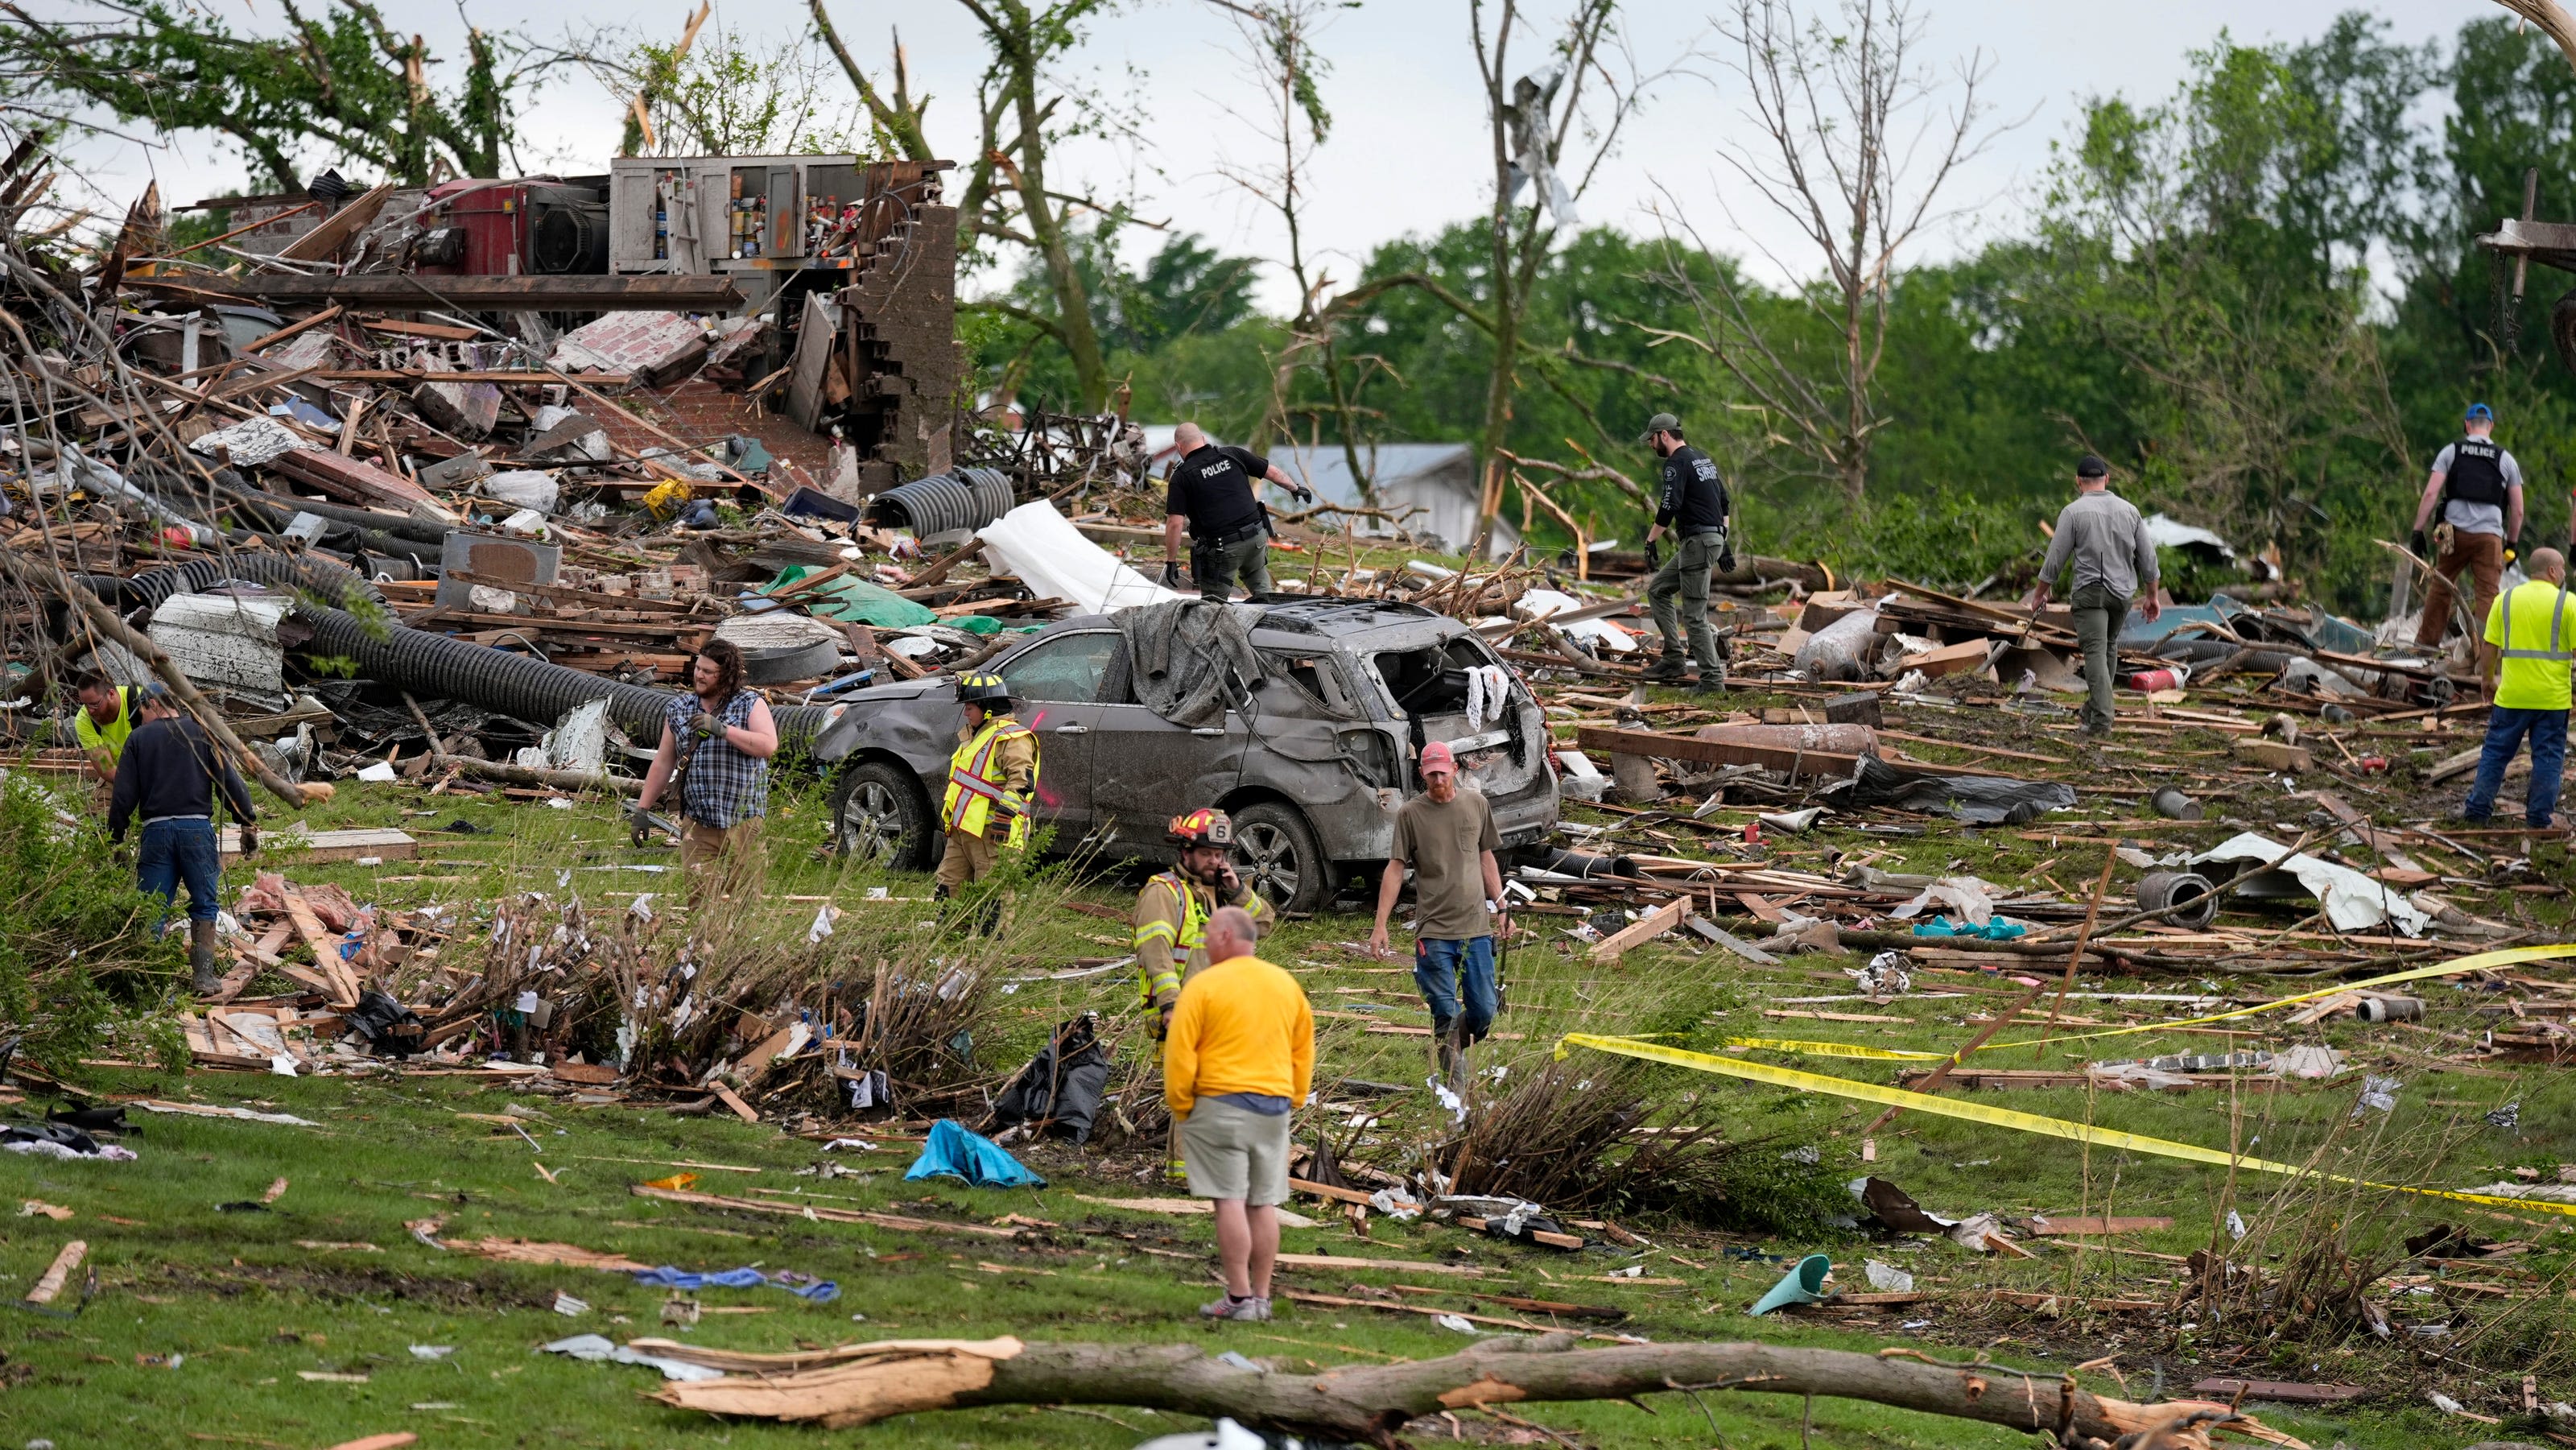 Tornado kills multiple people in Iowa as powerful storms again tear through Midwest